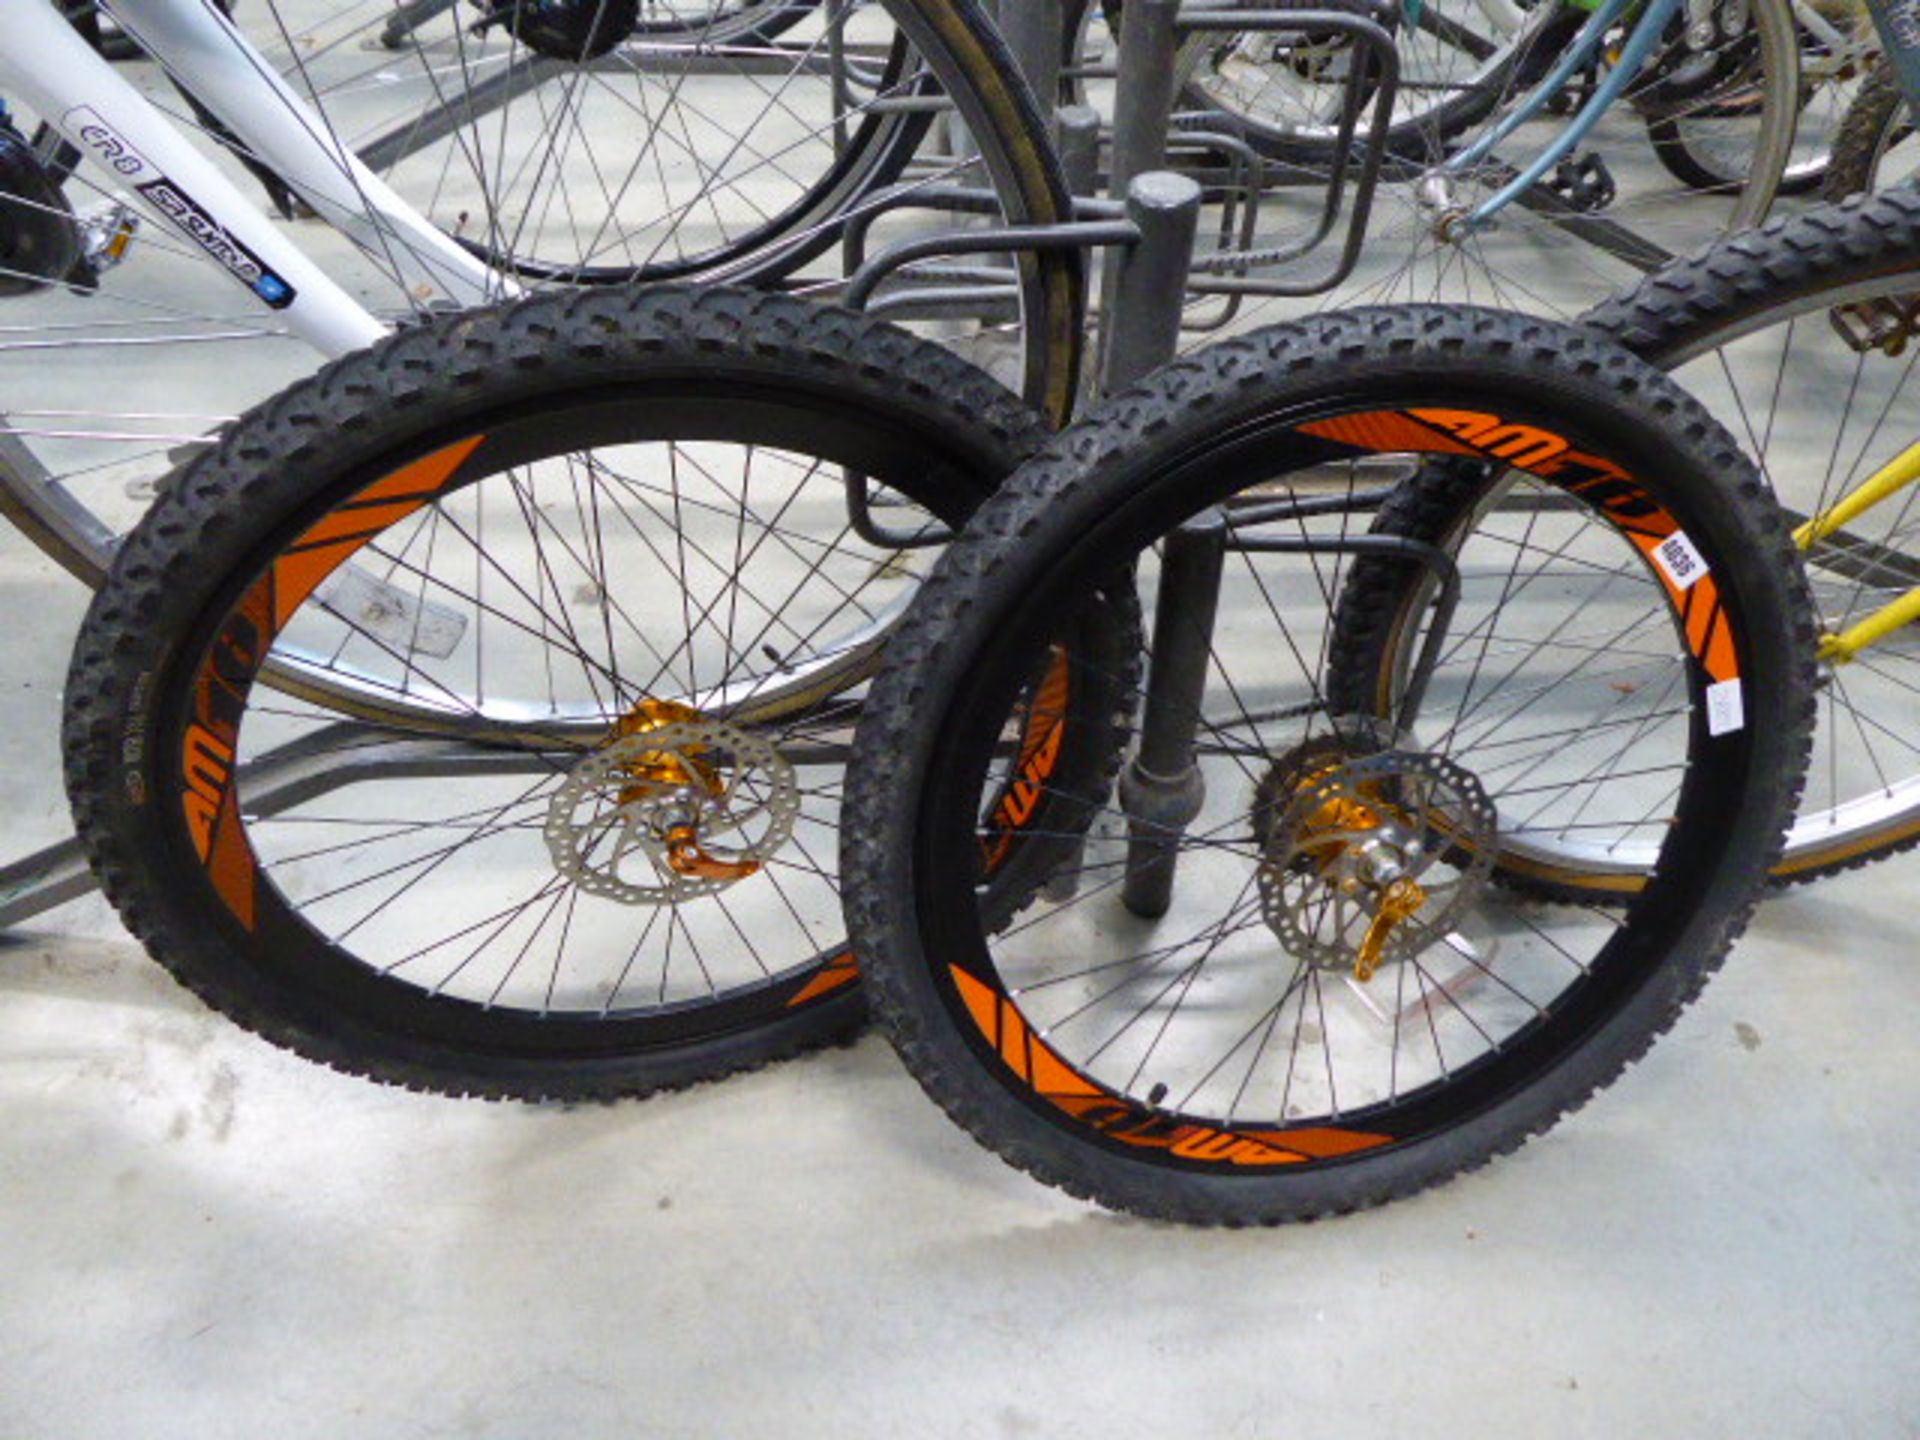 Pair of M16 bike wheels and tyres